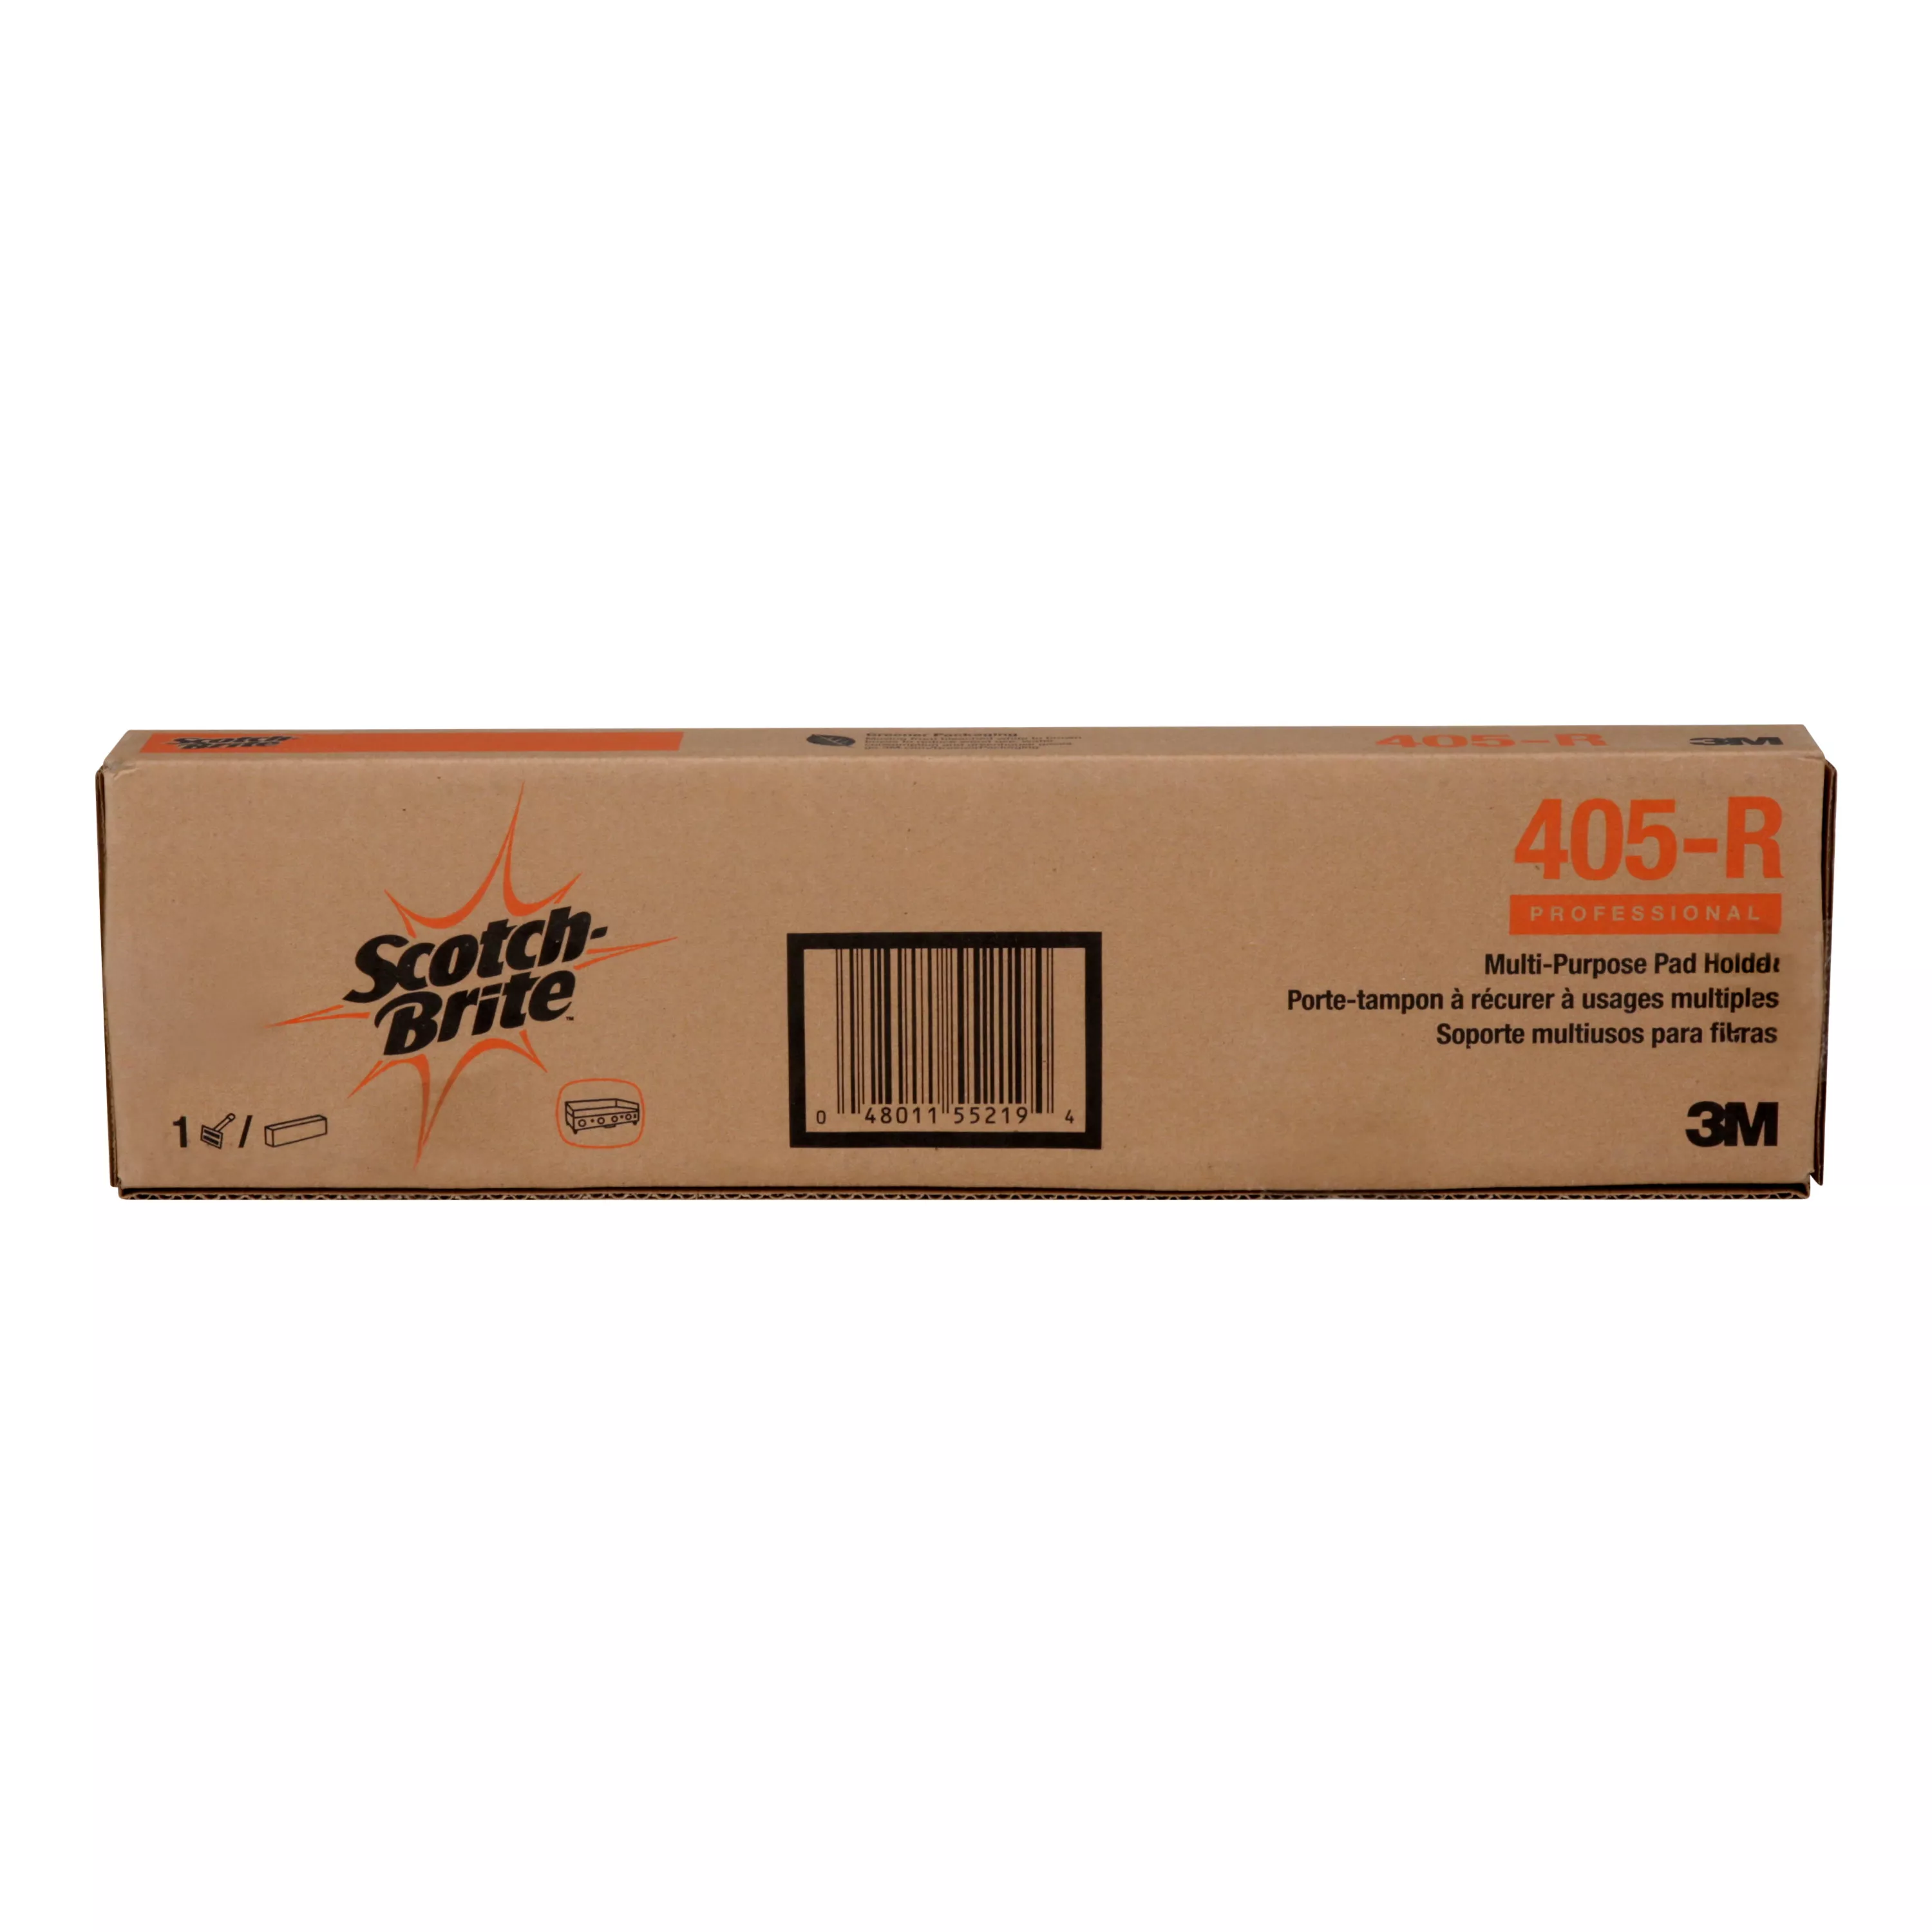 Product Number 405-R | Scotch-Brite™ Multi-Purpose Pad Holder 405-R